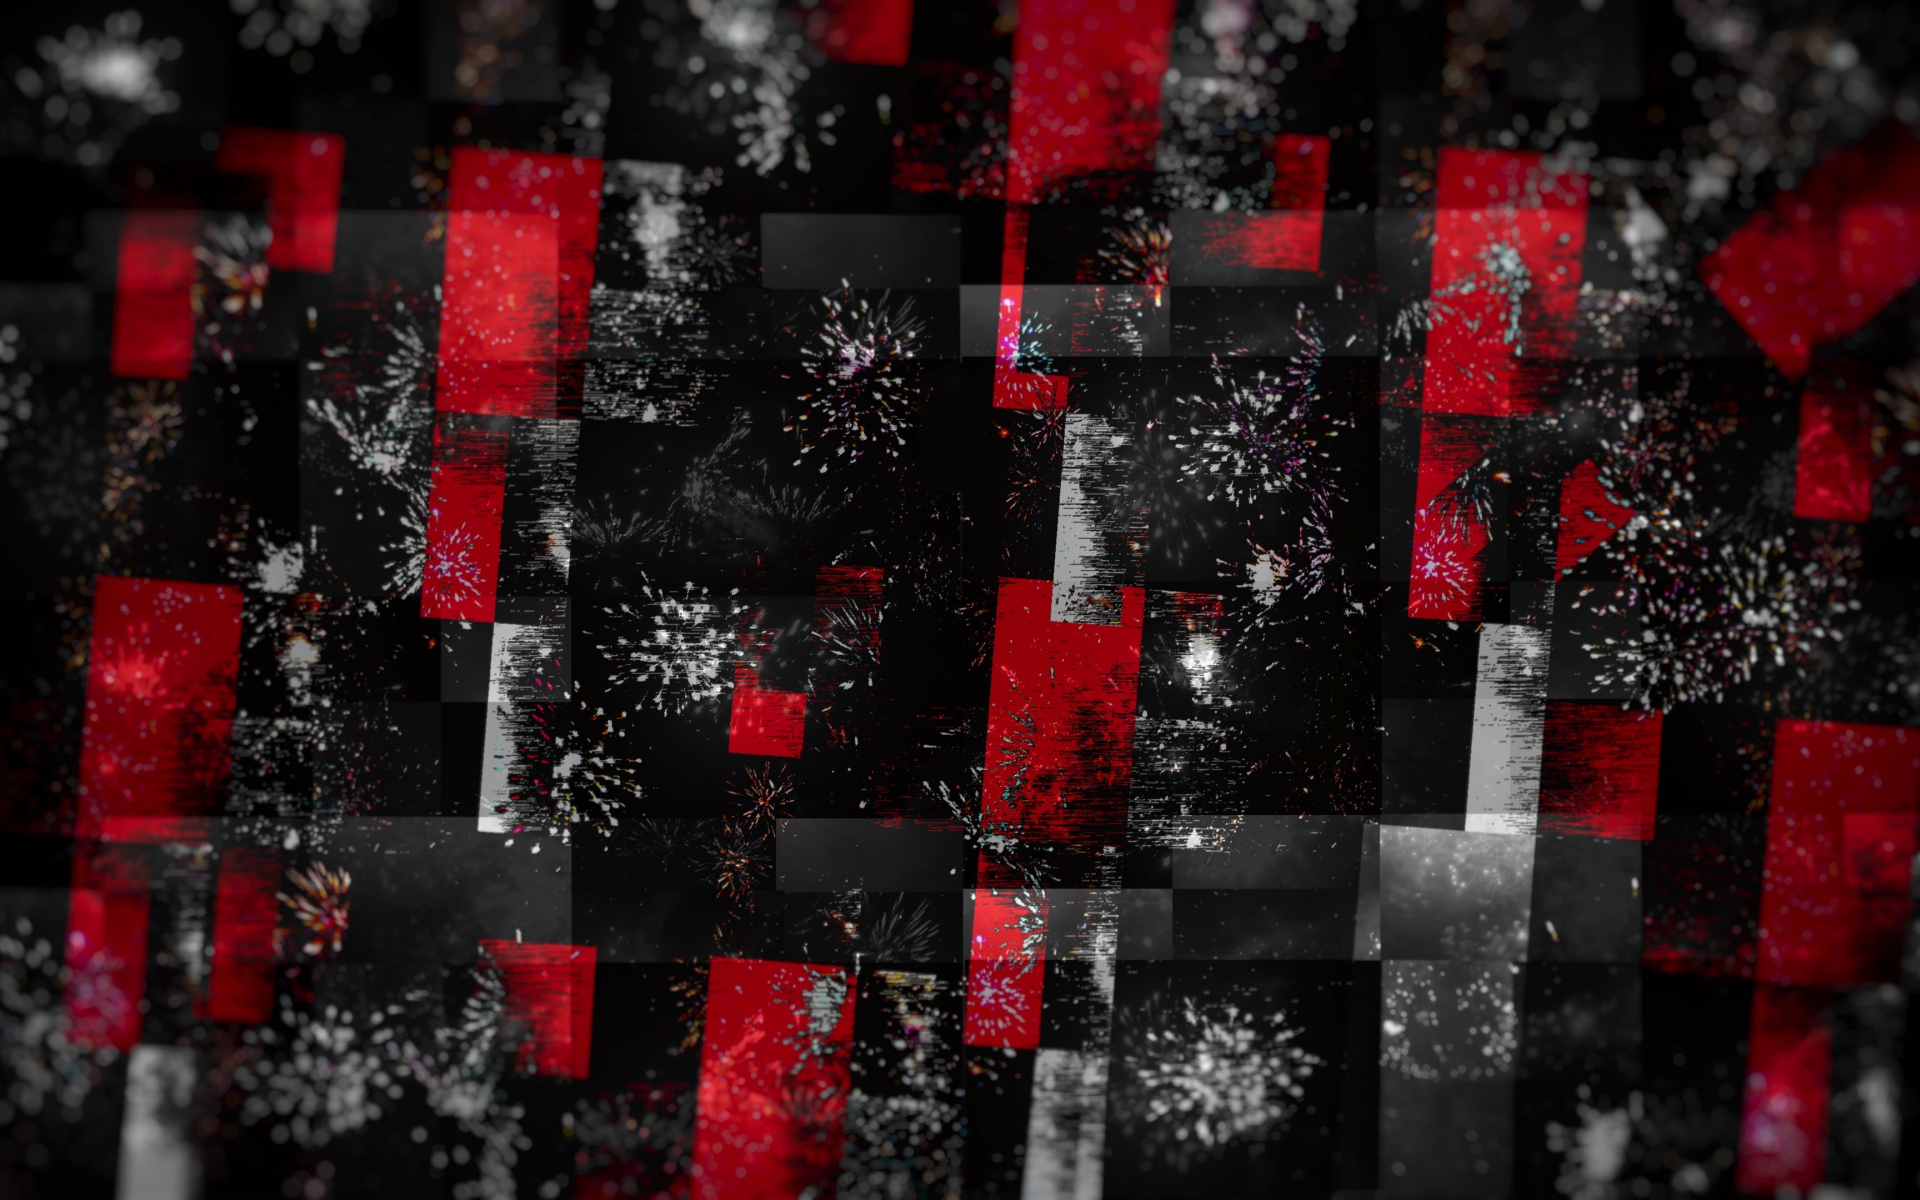 Download wallpaper 1920x1200 glitch art, abstract, dark, 16:10 widescreen  1920x1200 hd background, 2311